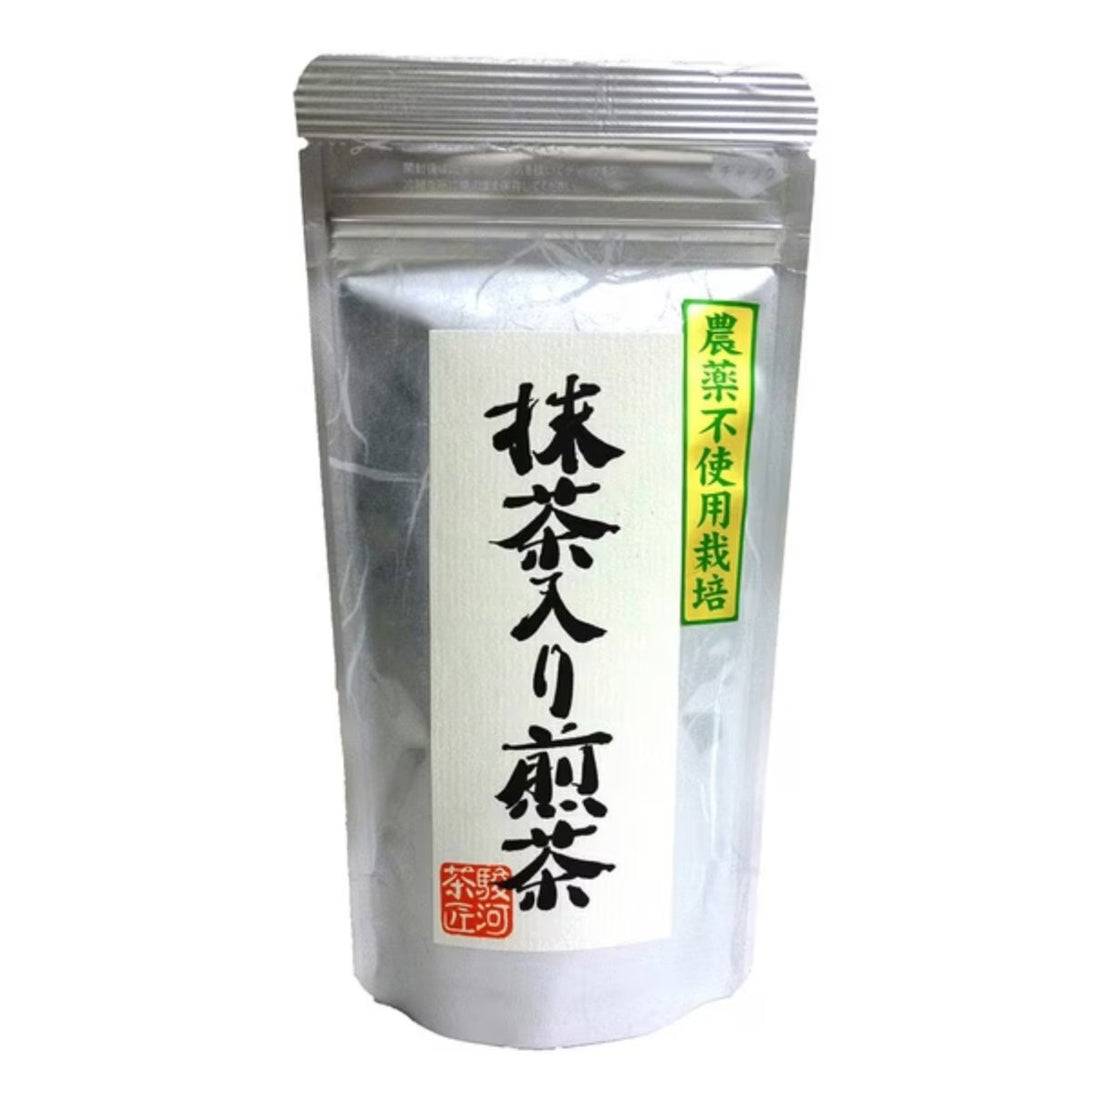 Hagiri pesticide-free cultivation Matcha sencha 100g - NihonMura